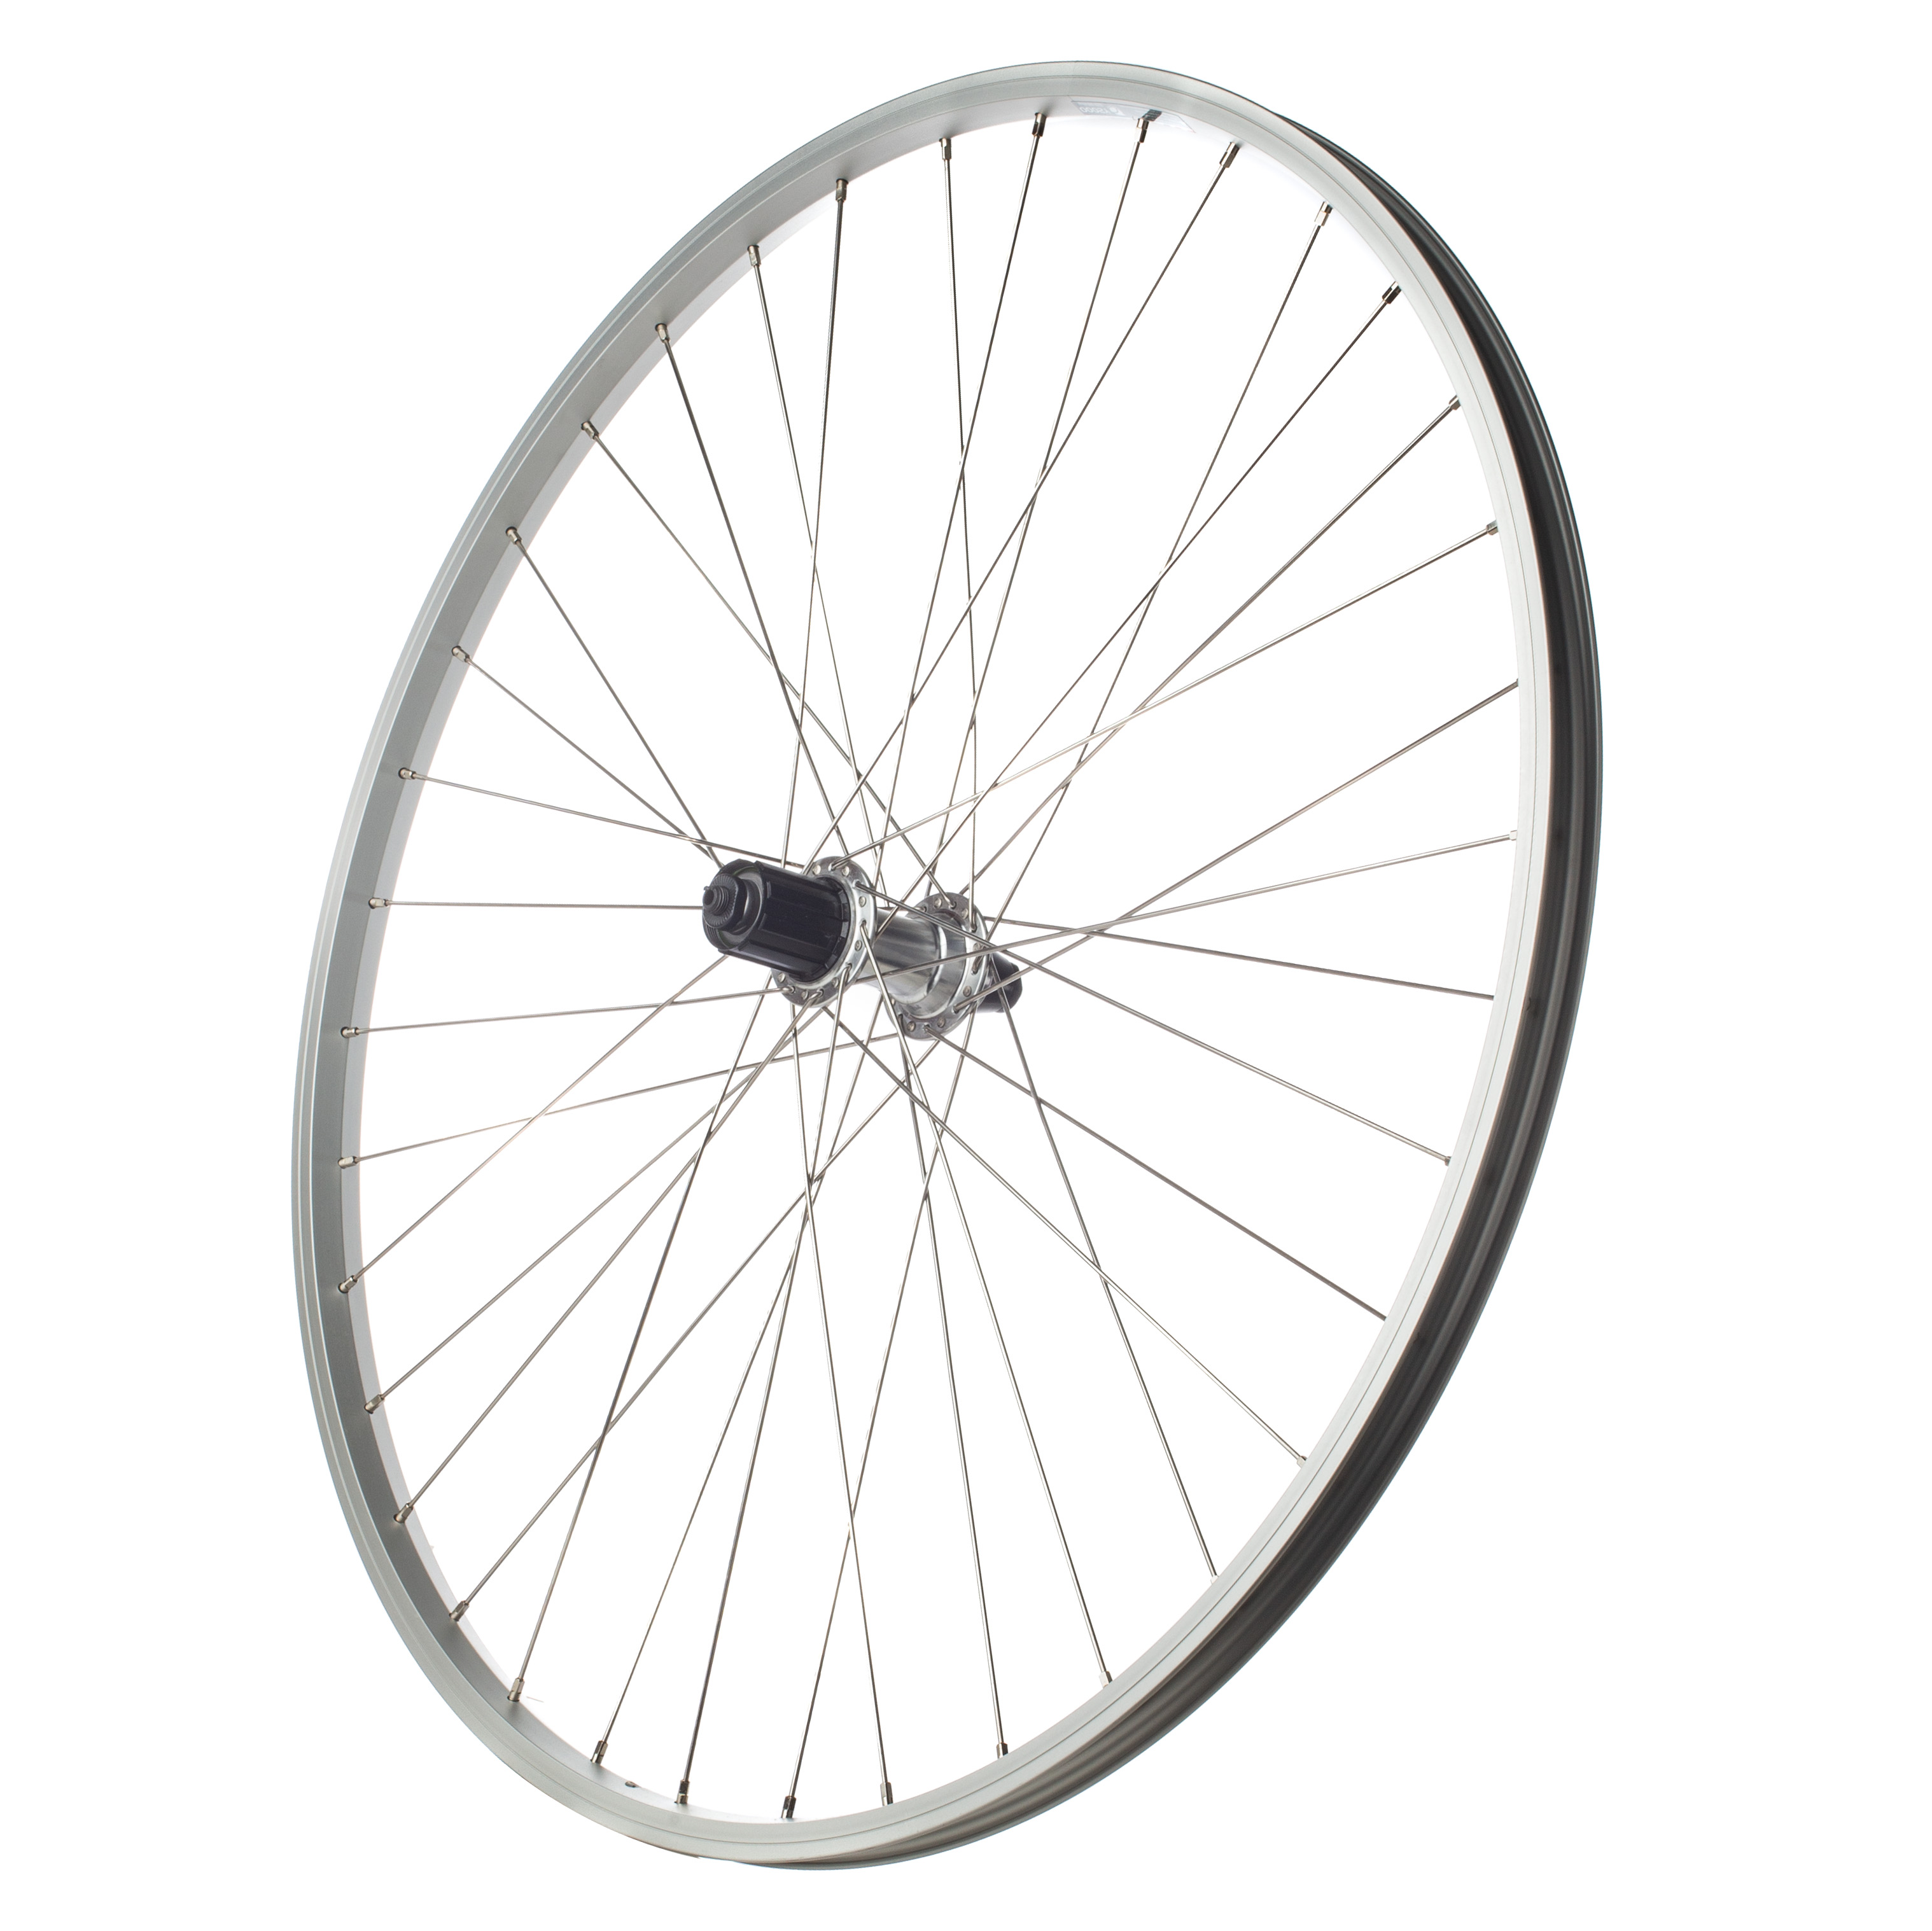 Details about   700c REAR Hybrid Bike Cycle Wheel SCREW ON Freewheel Hub 